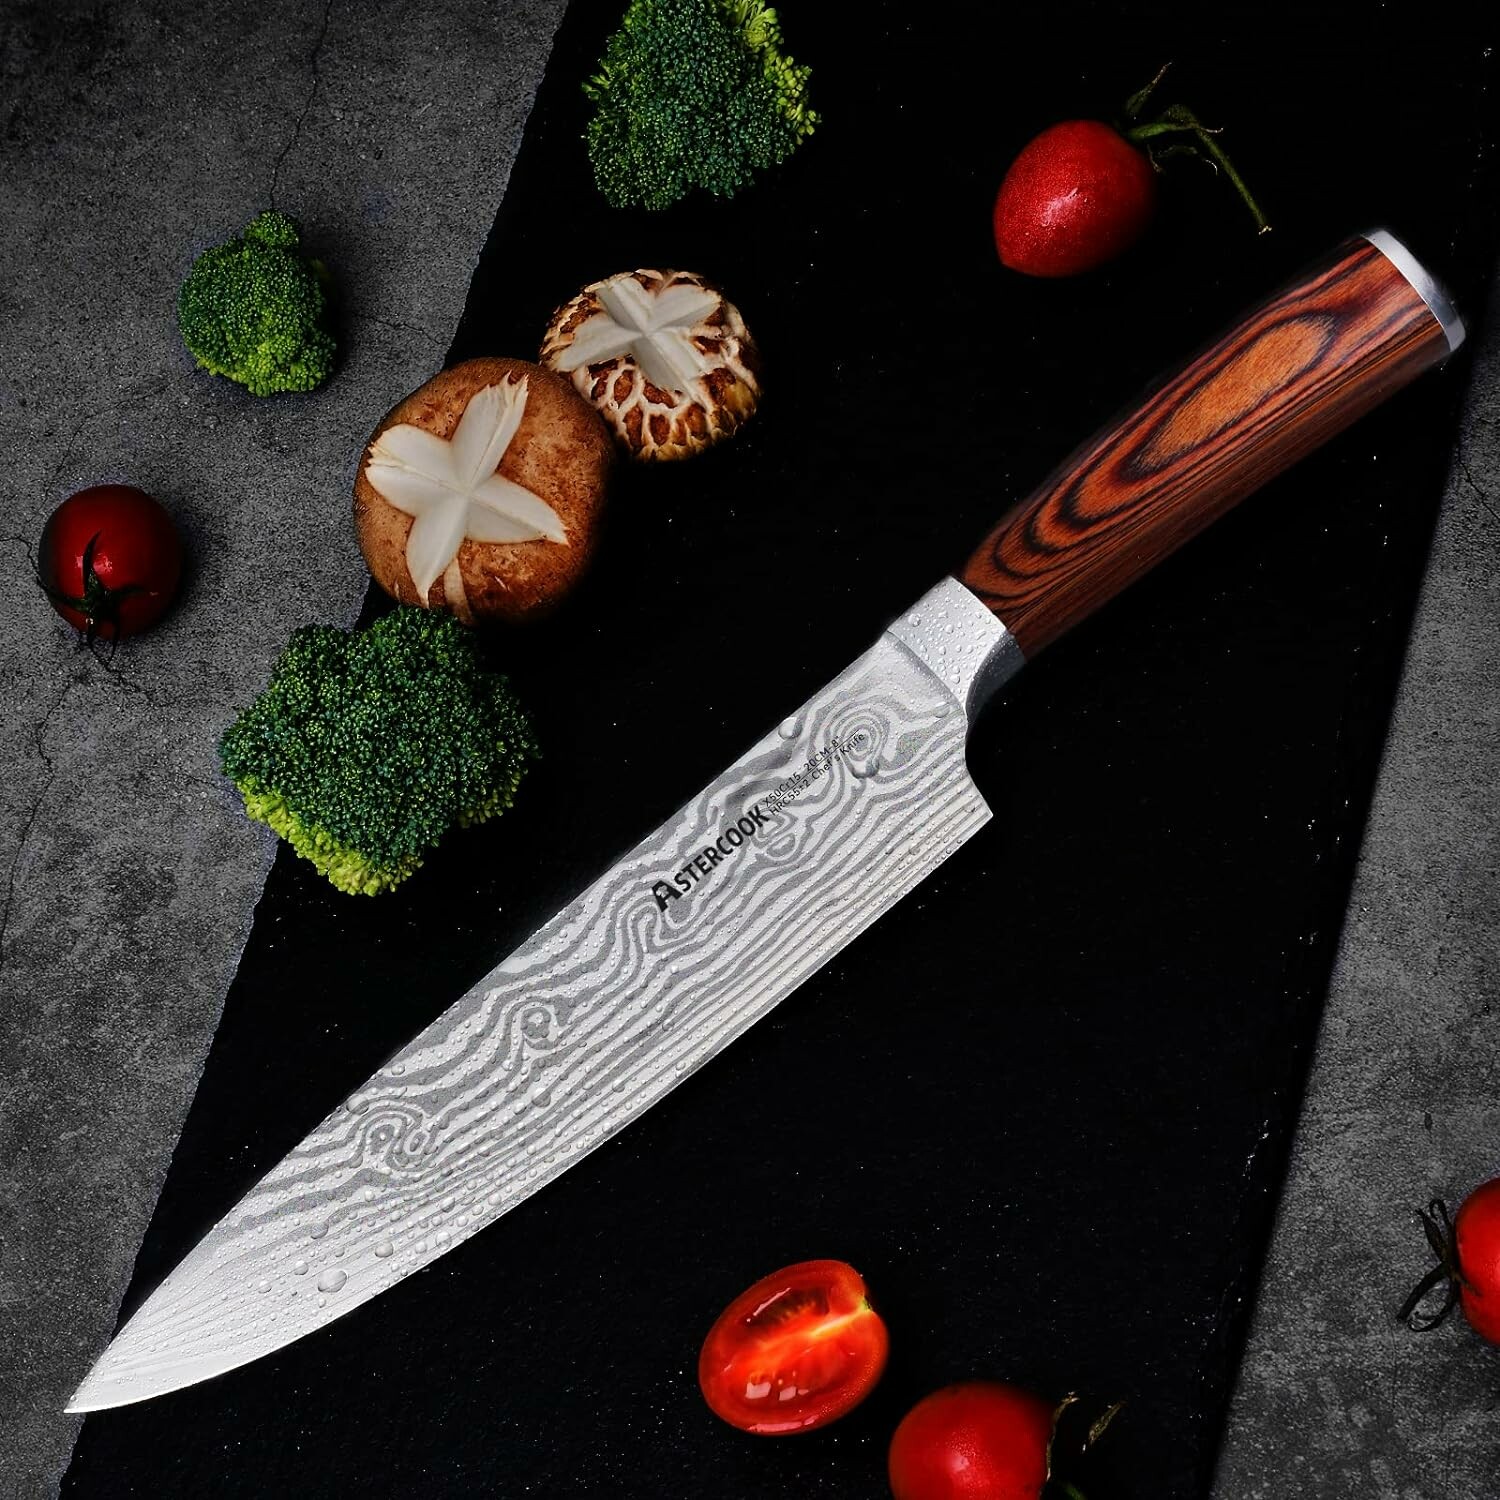 Astercook Germen Chef Knife - Astercook 8 Professional Chef Knife